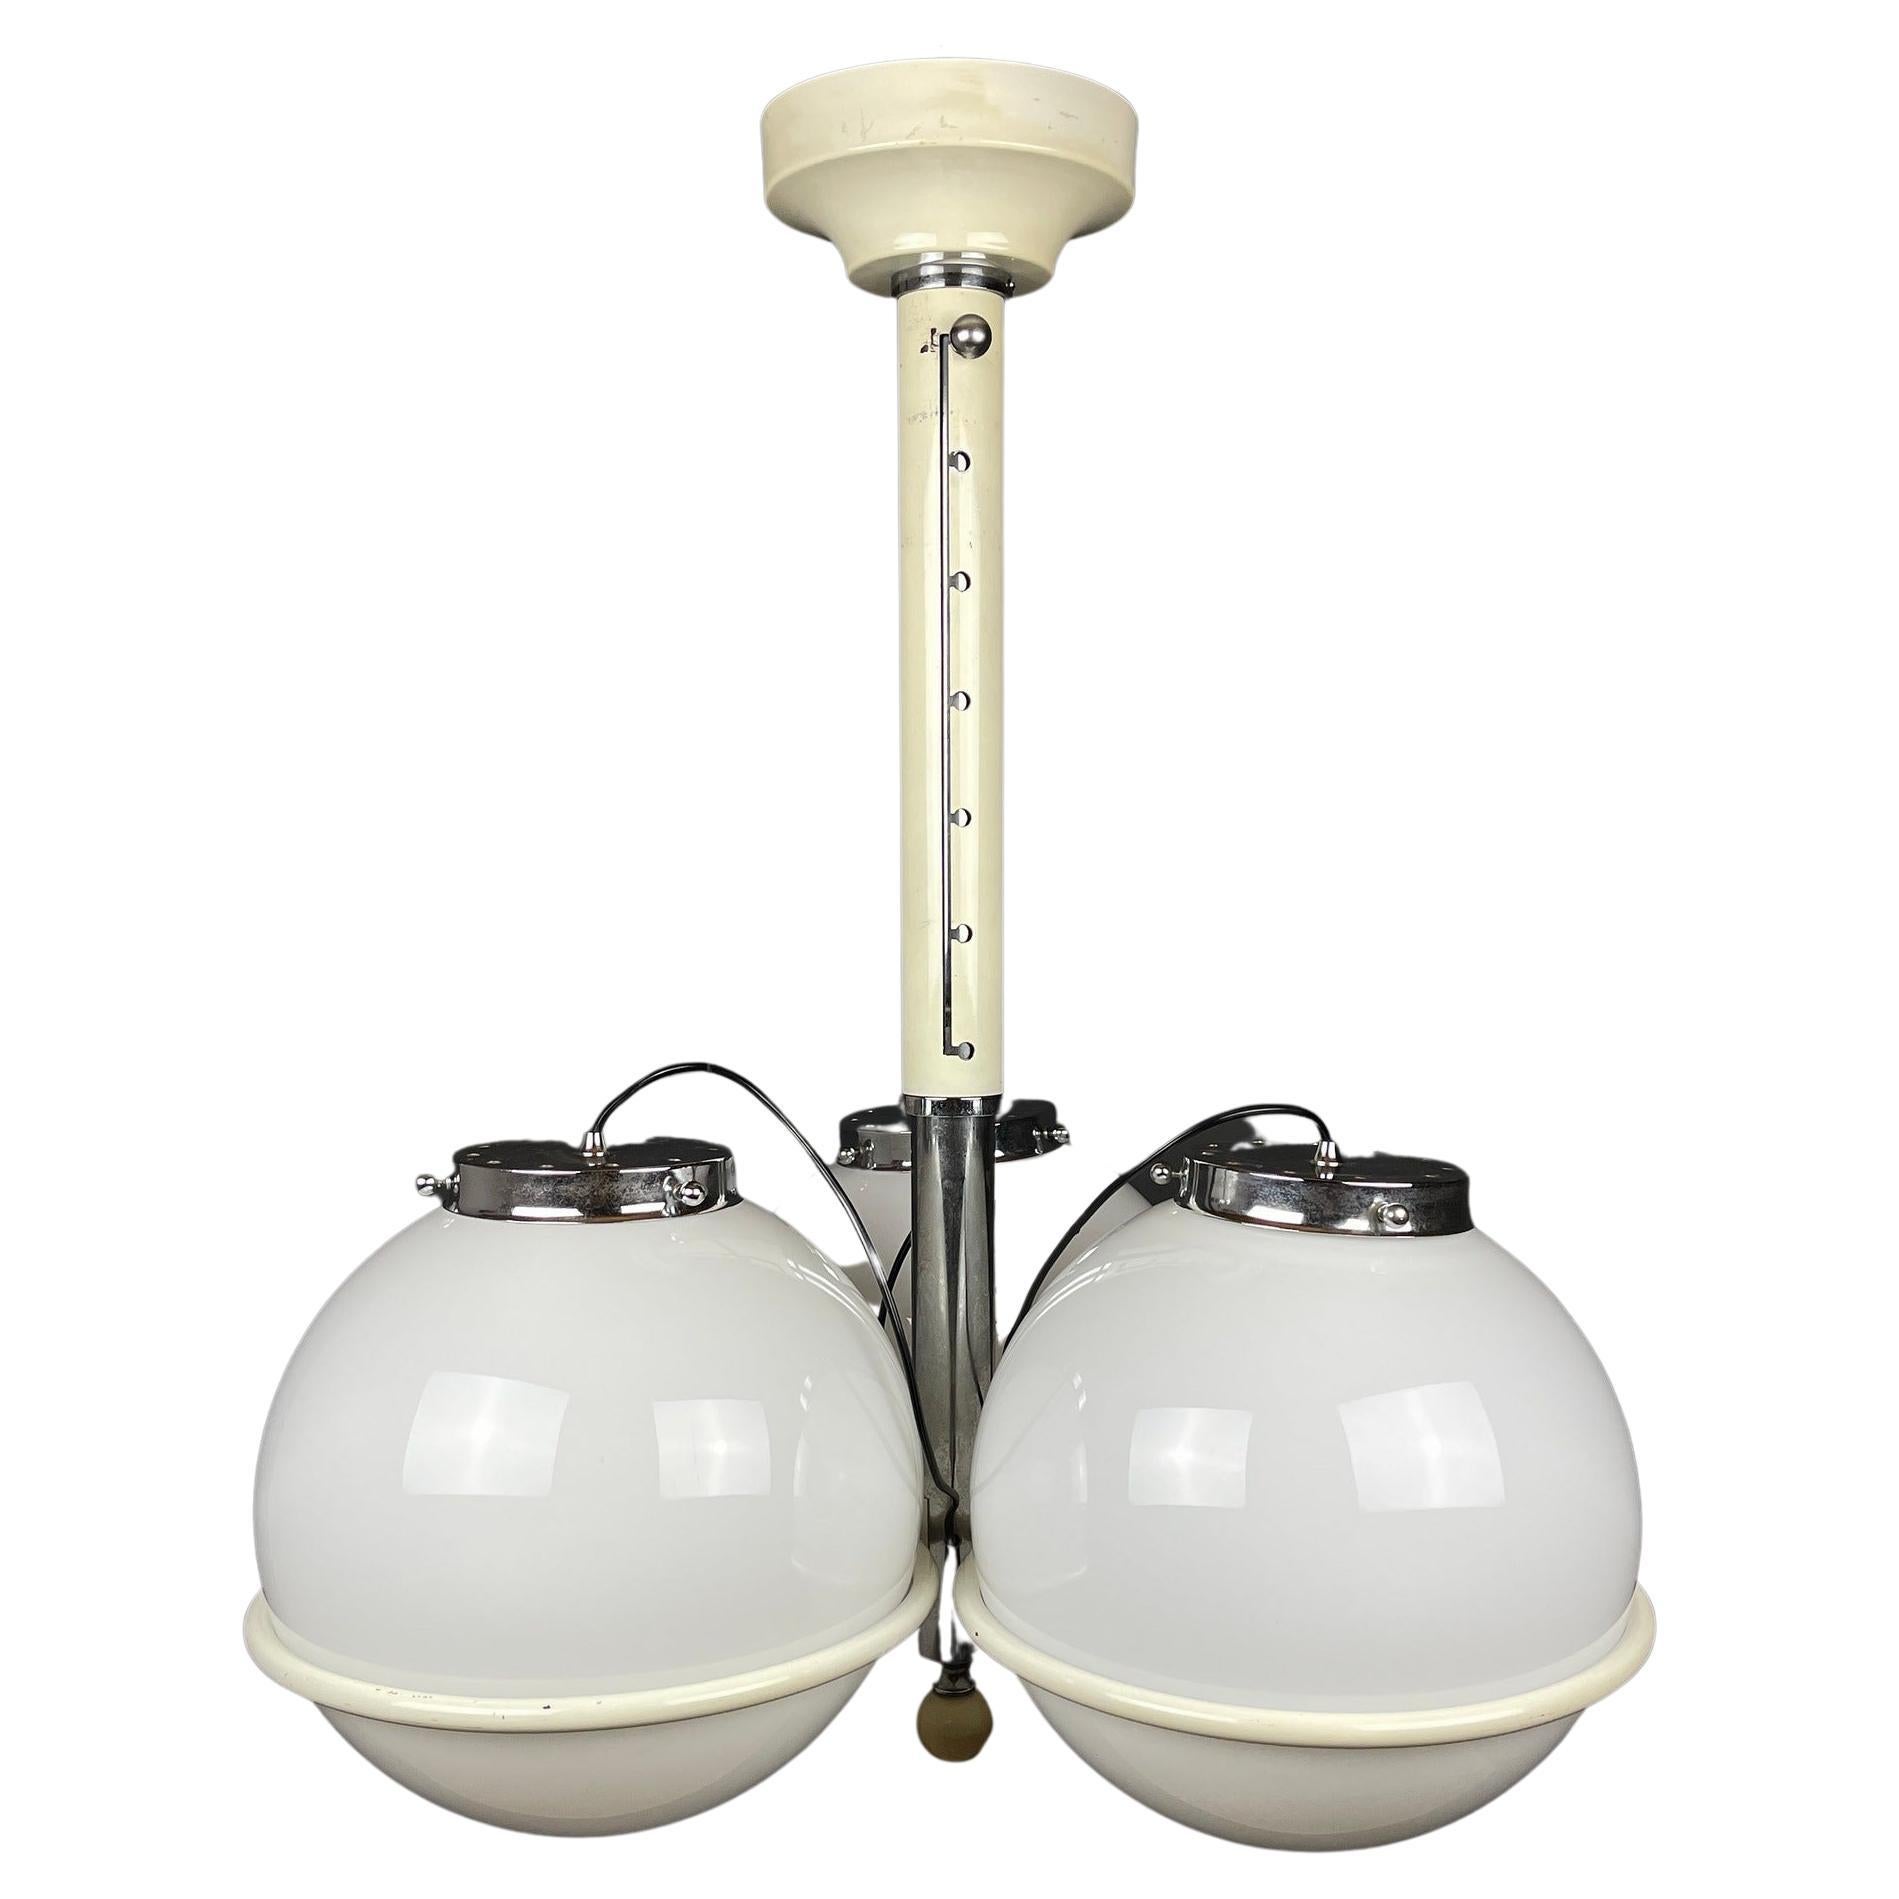 Gino Sarfatti Murano Glass Globe Pendant Lamp, Italy, 1960s For Sale